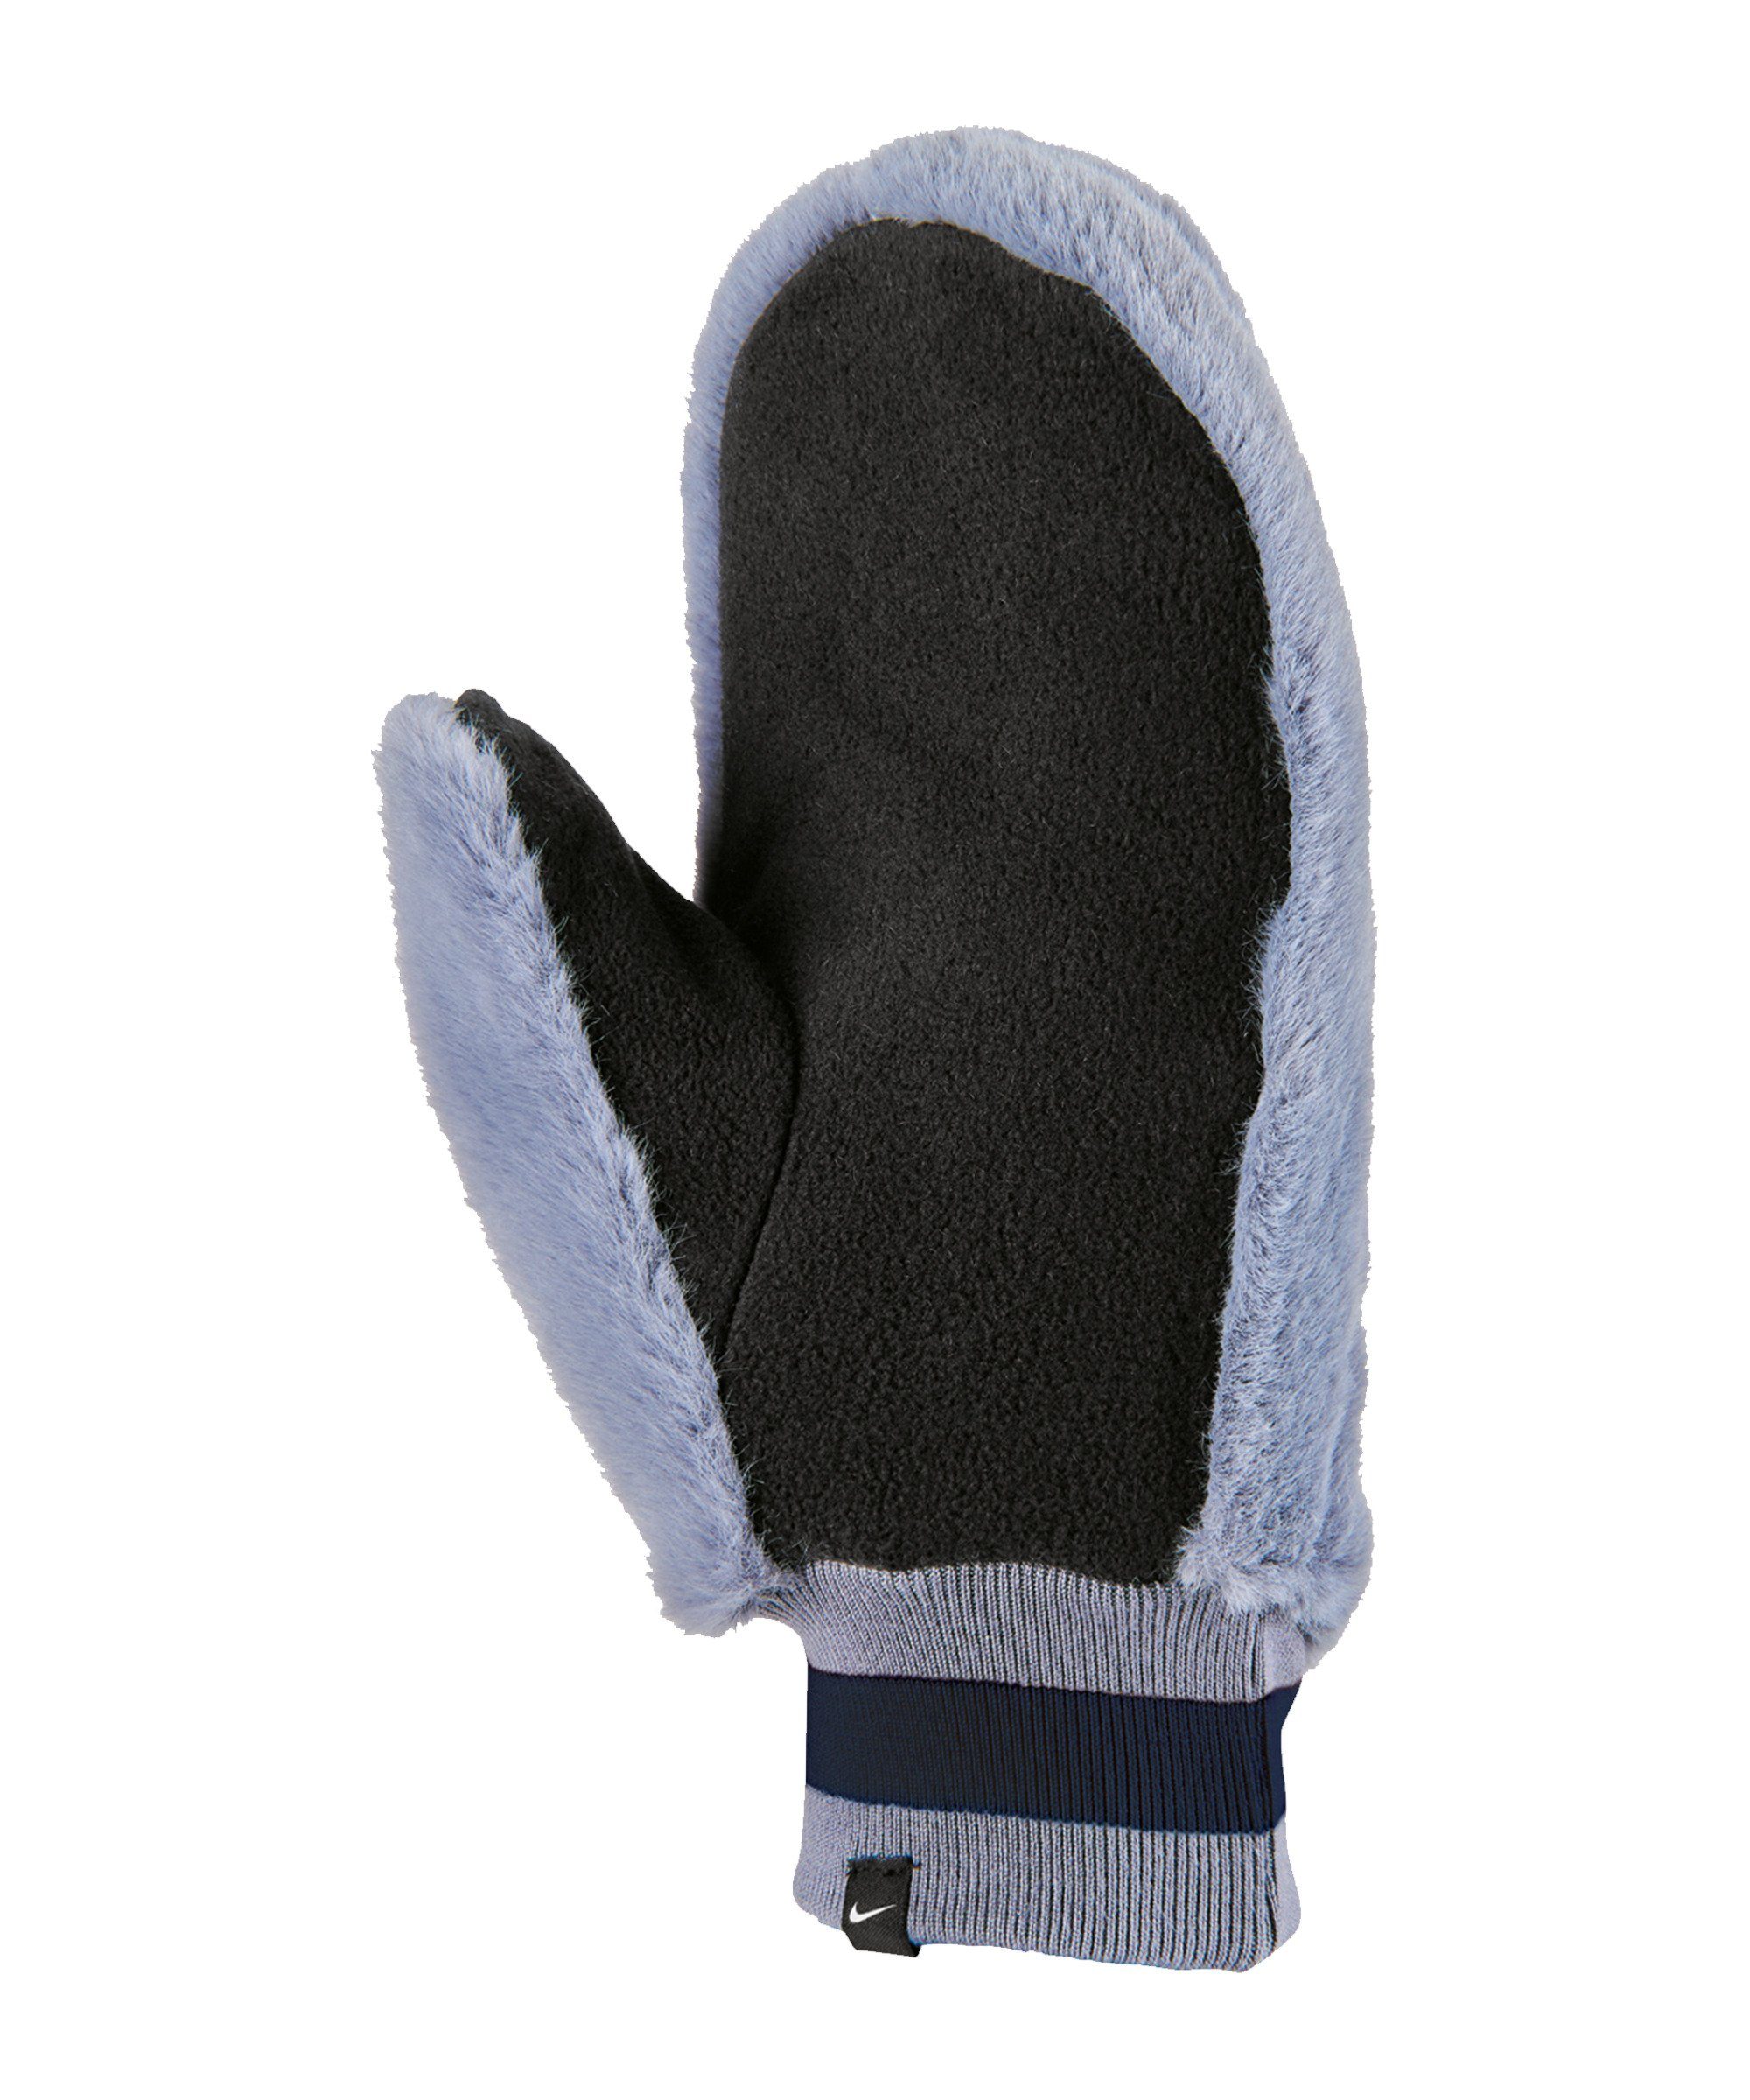 Nike Feldspielerhandschuhe Warm Mittens lilaschwarz Handschuhe